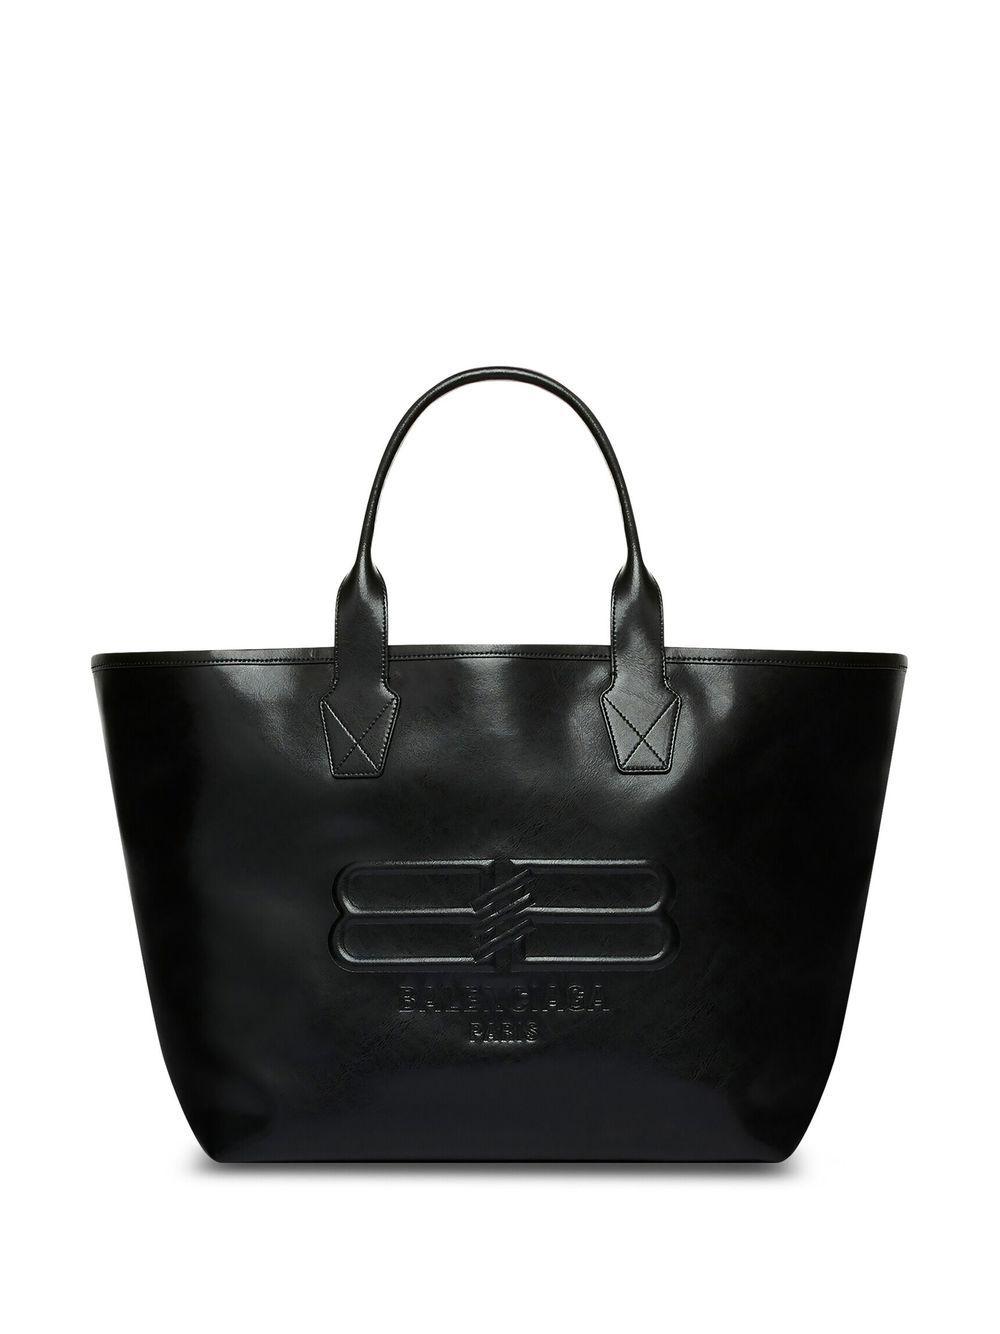 Balenciaga Embossed Logo Jumbo Leather Tote Bag in Black | Lyst